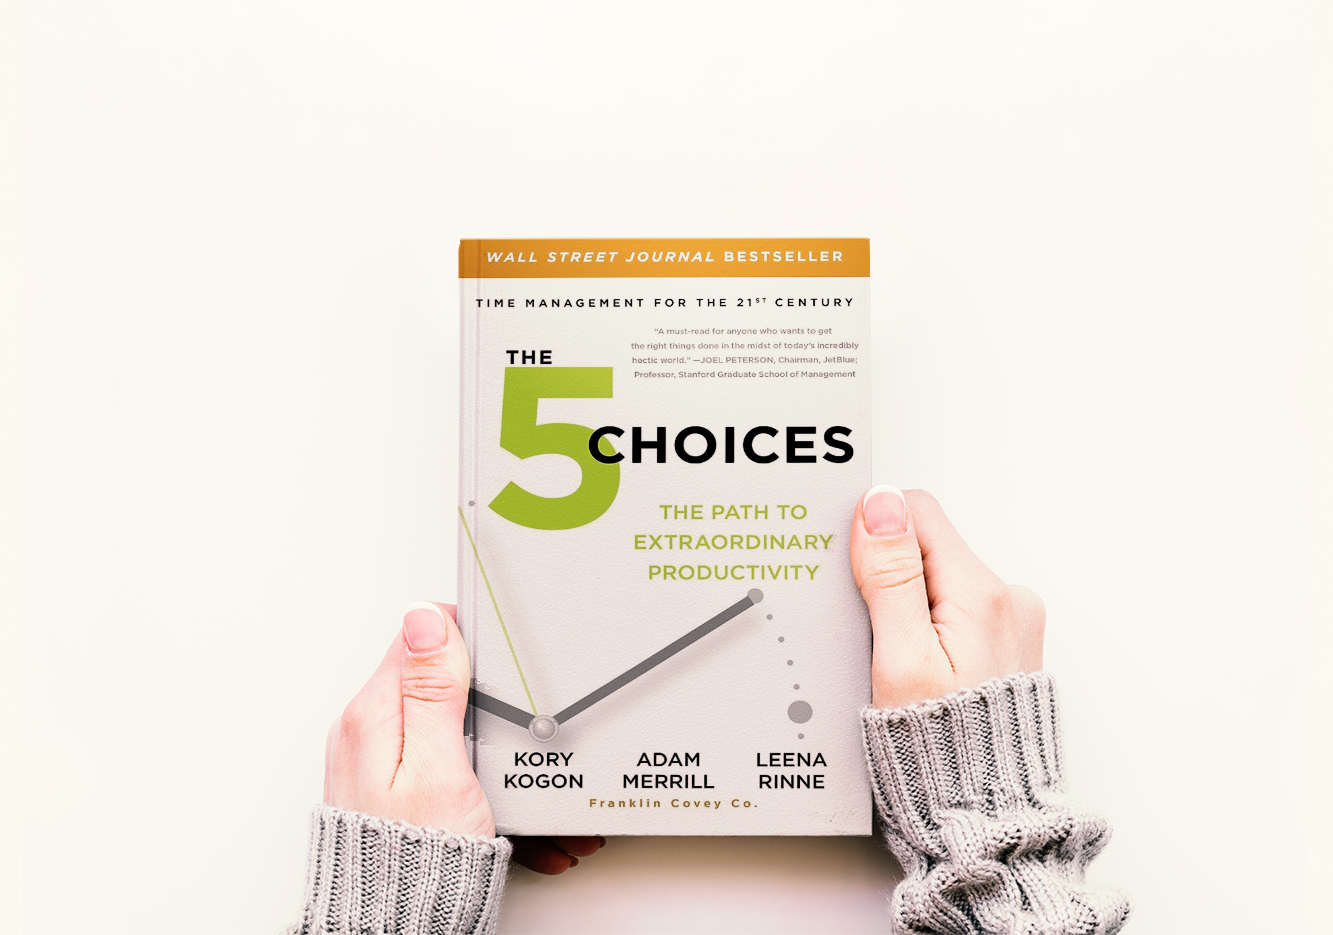 Découverte du livre, “The 5 choices, the path to extraordinary productivity” by Kory Kogon, Adam Merrill, Leena Rinne